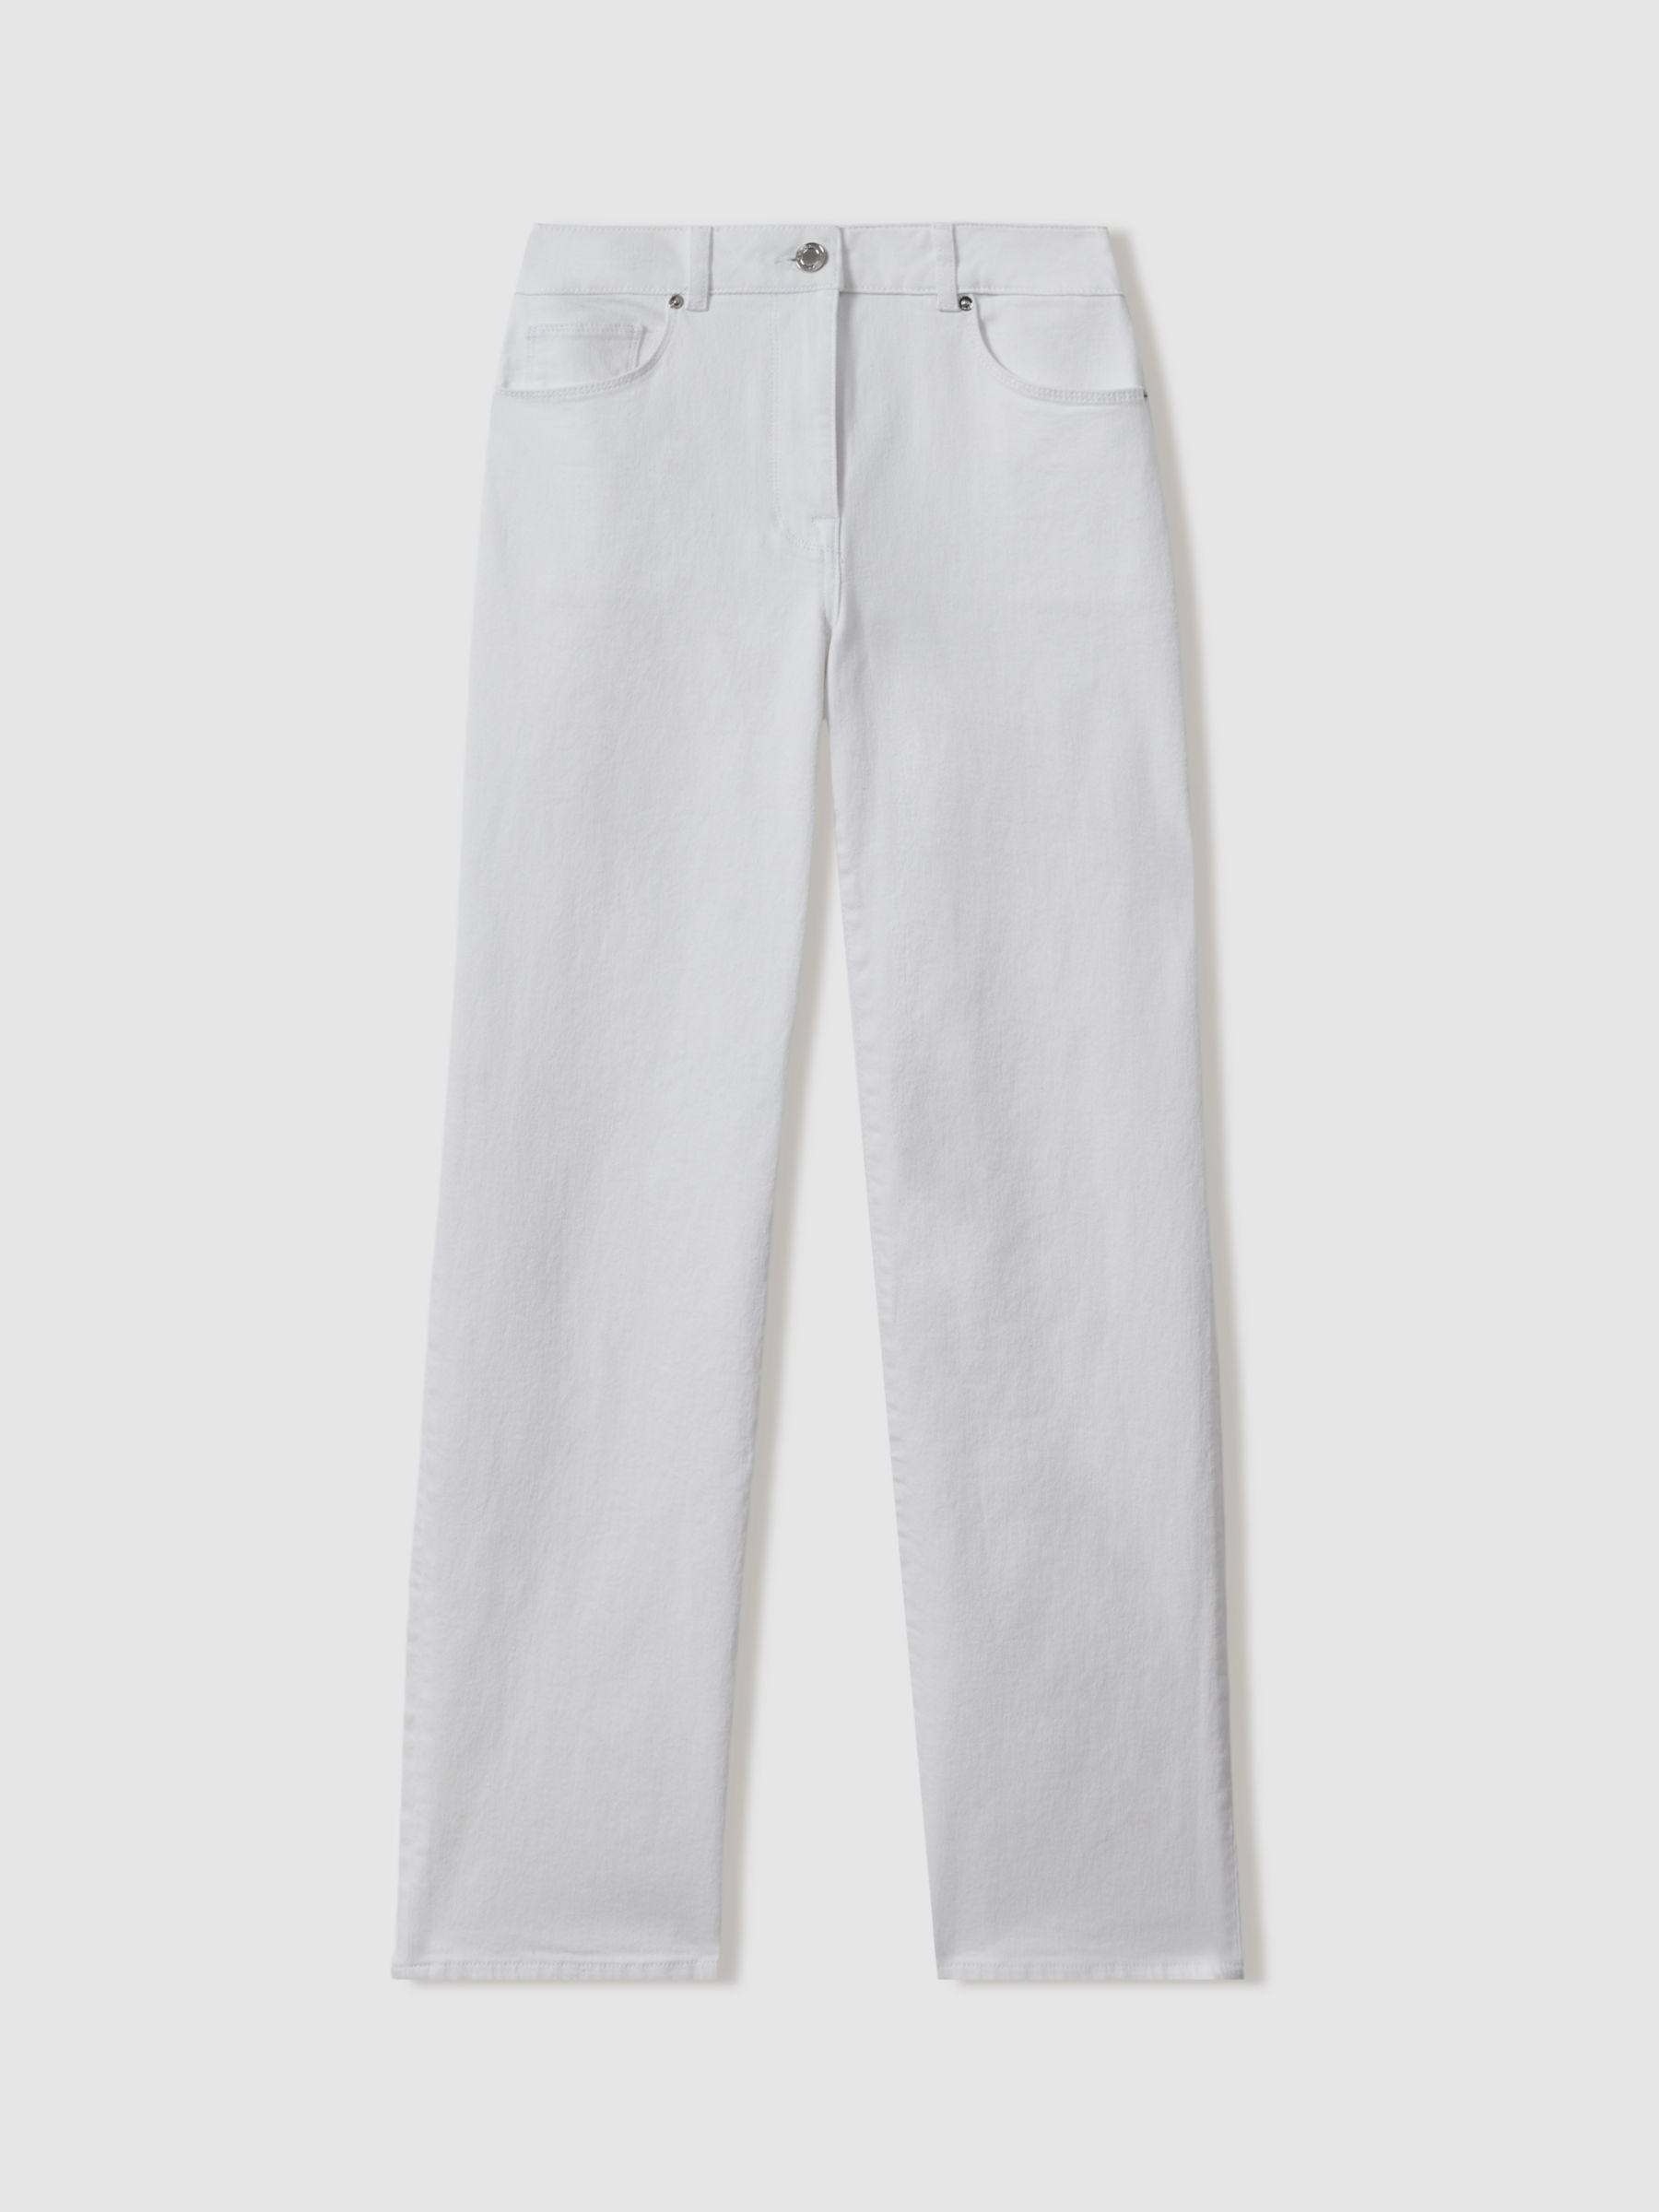 Reiss Petite Selin Straight Leg Jeans, White, 25